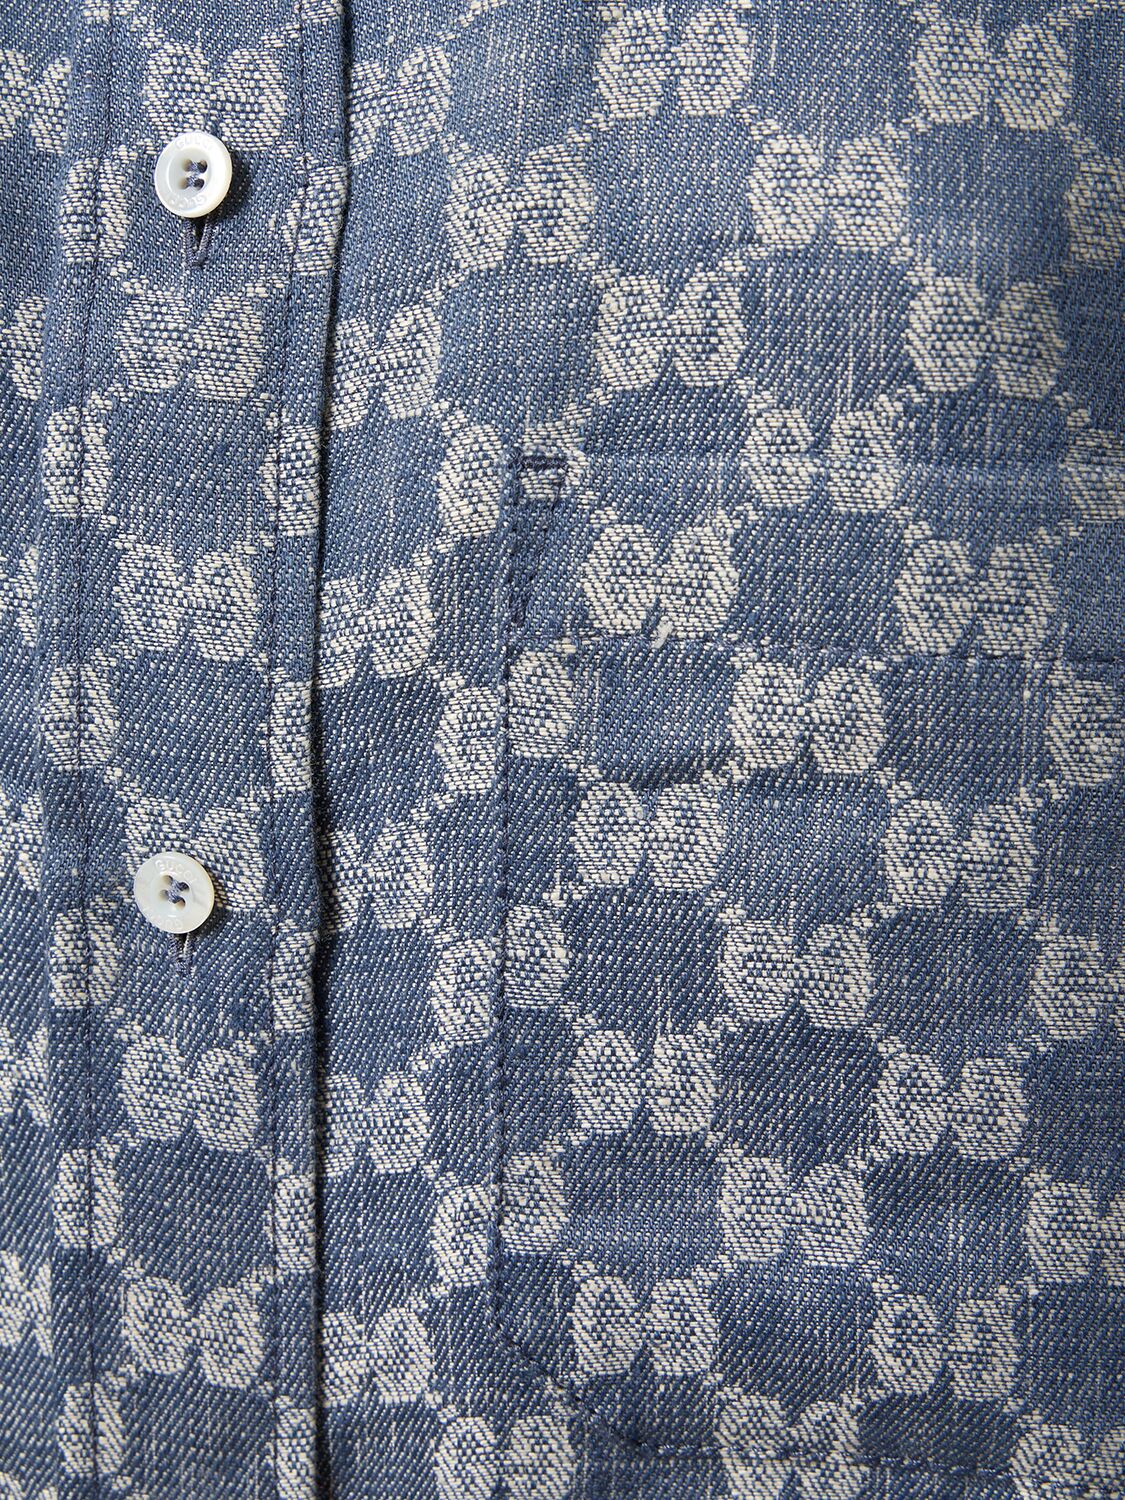 Shop Gucci Gg Linen Jacquard Short Sleeve Shirt In Blue,grey